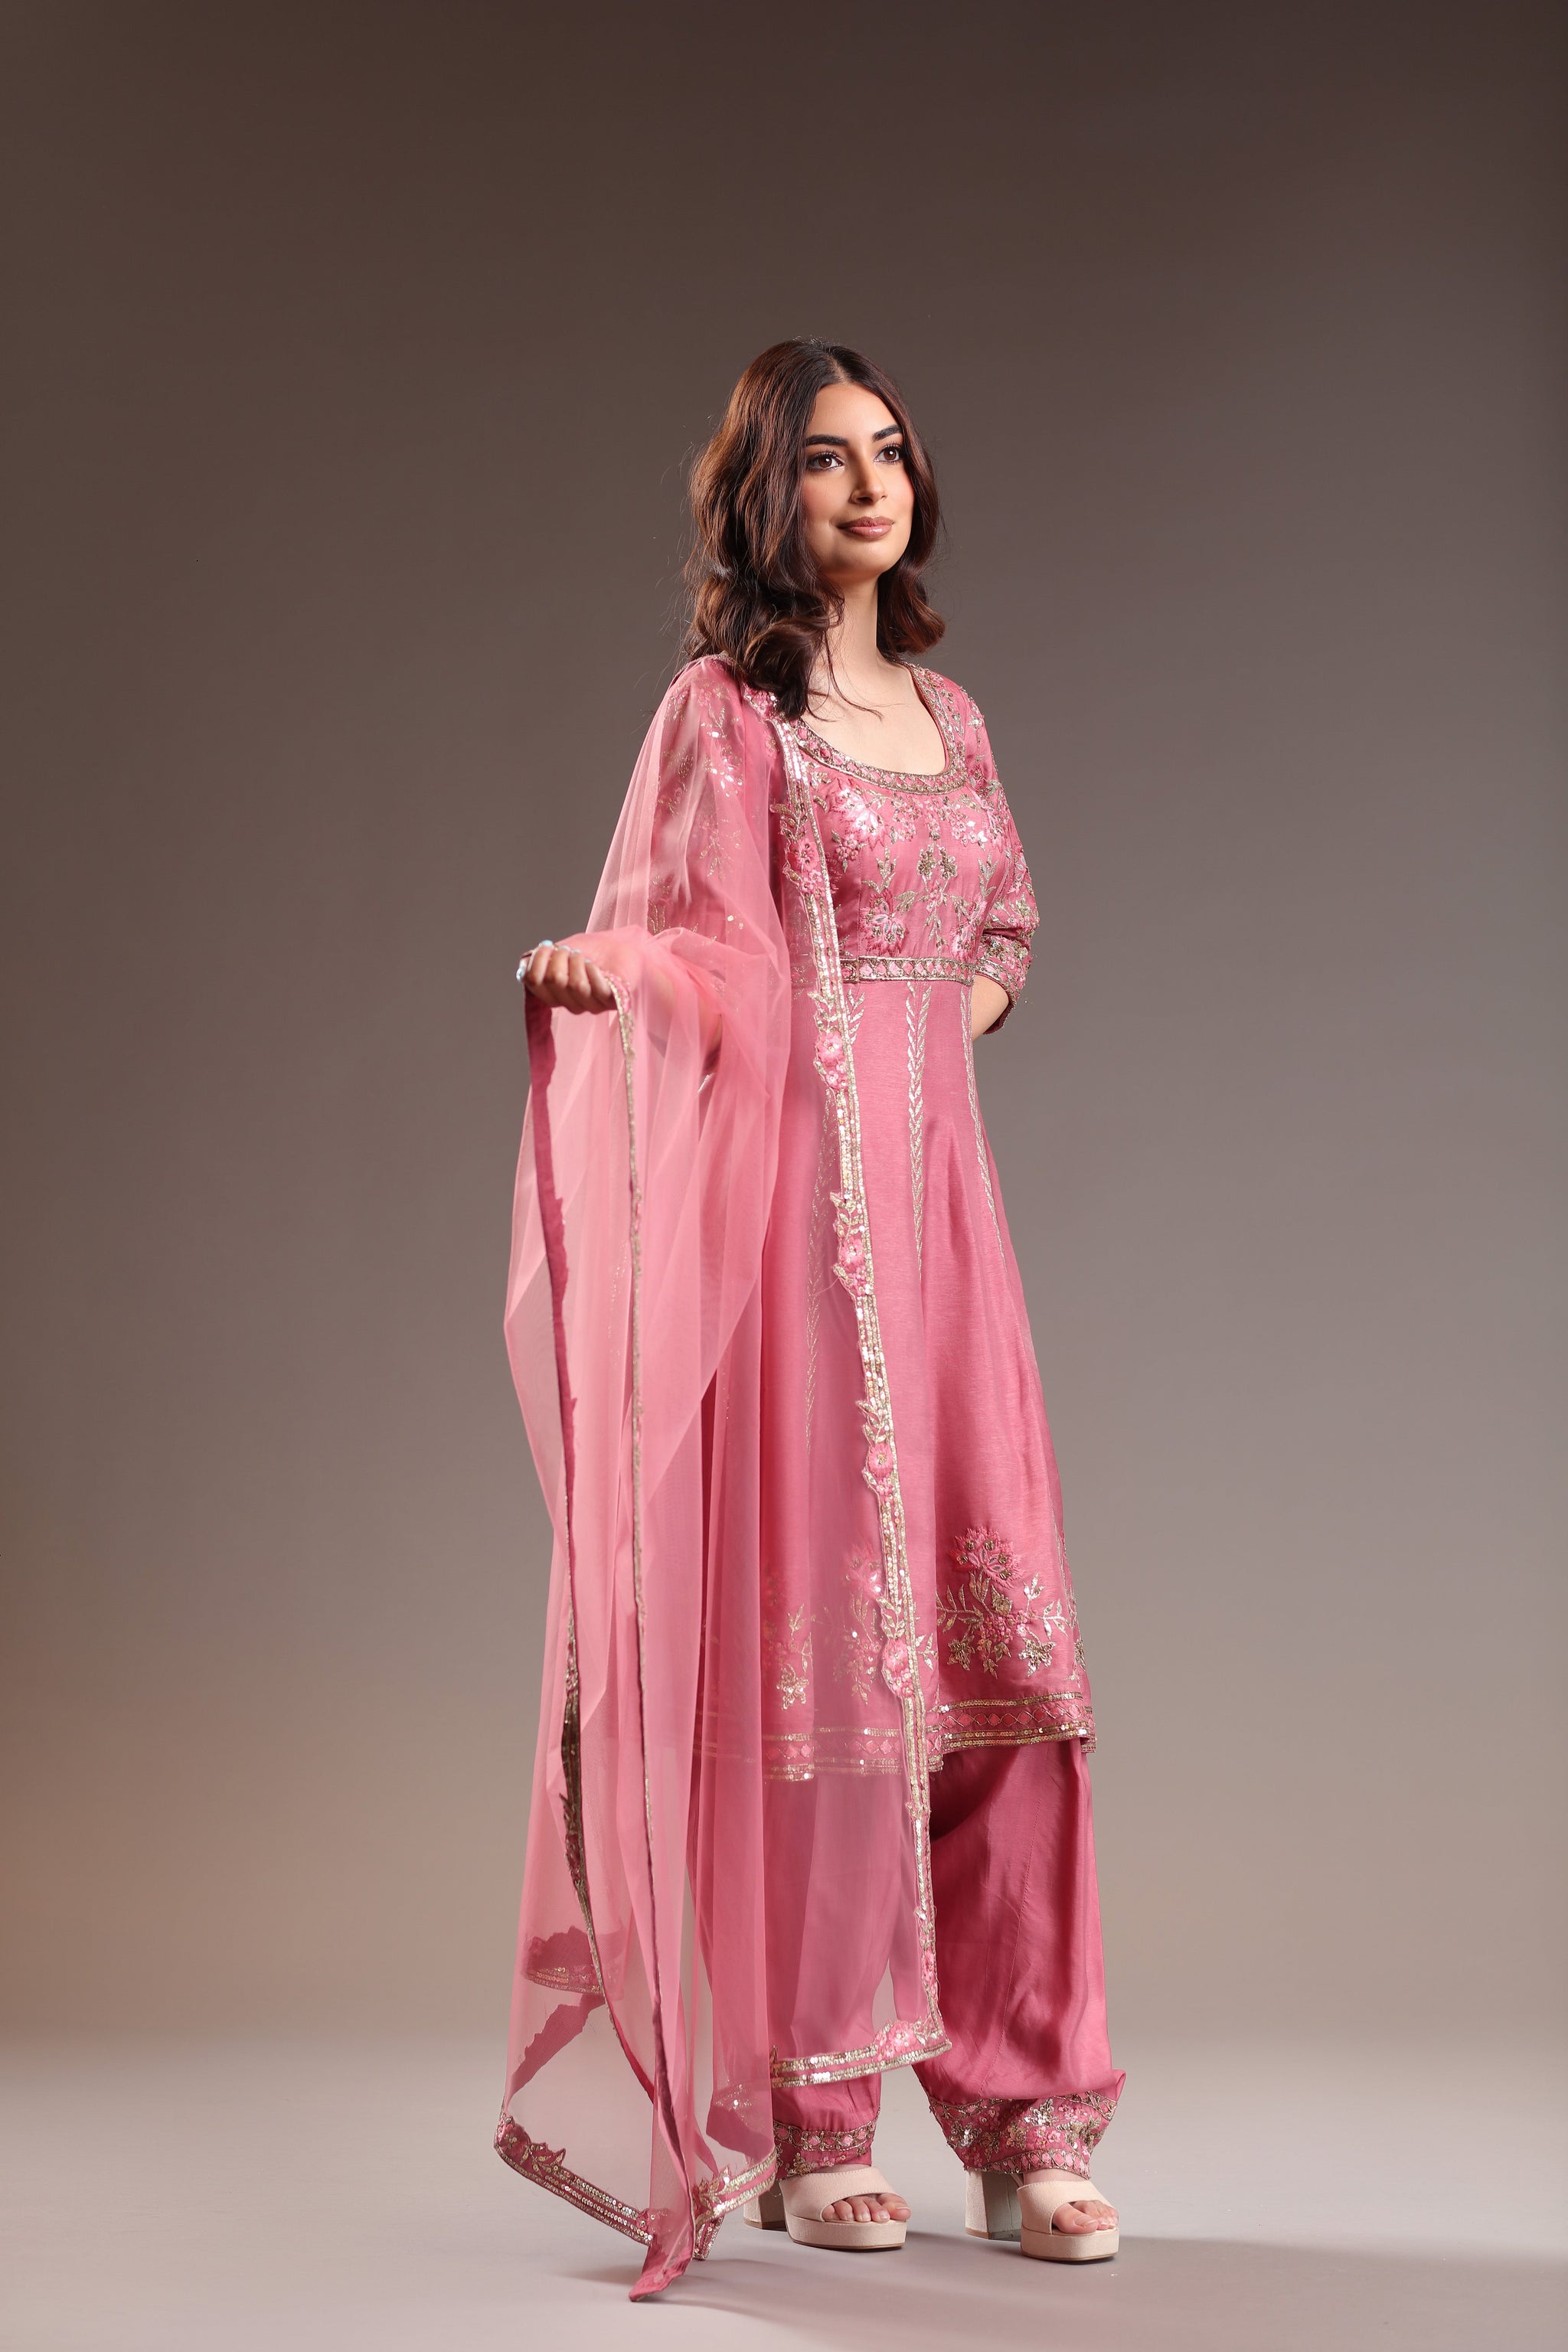 Elegant Rosy Outfit  Featuring Embellished Anarkali With Salwar